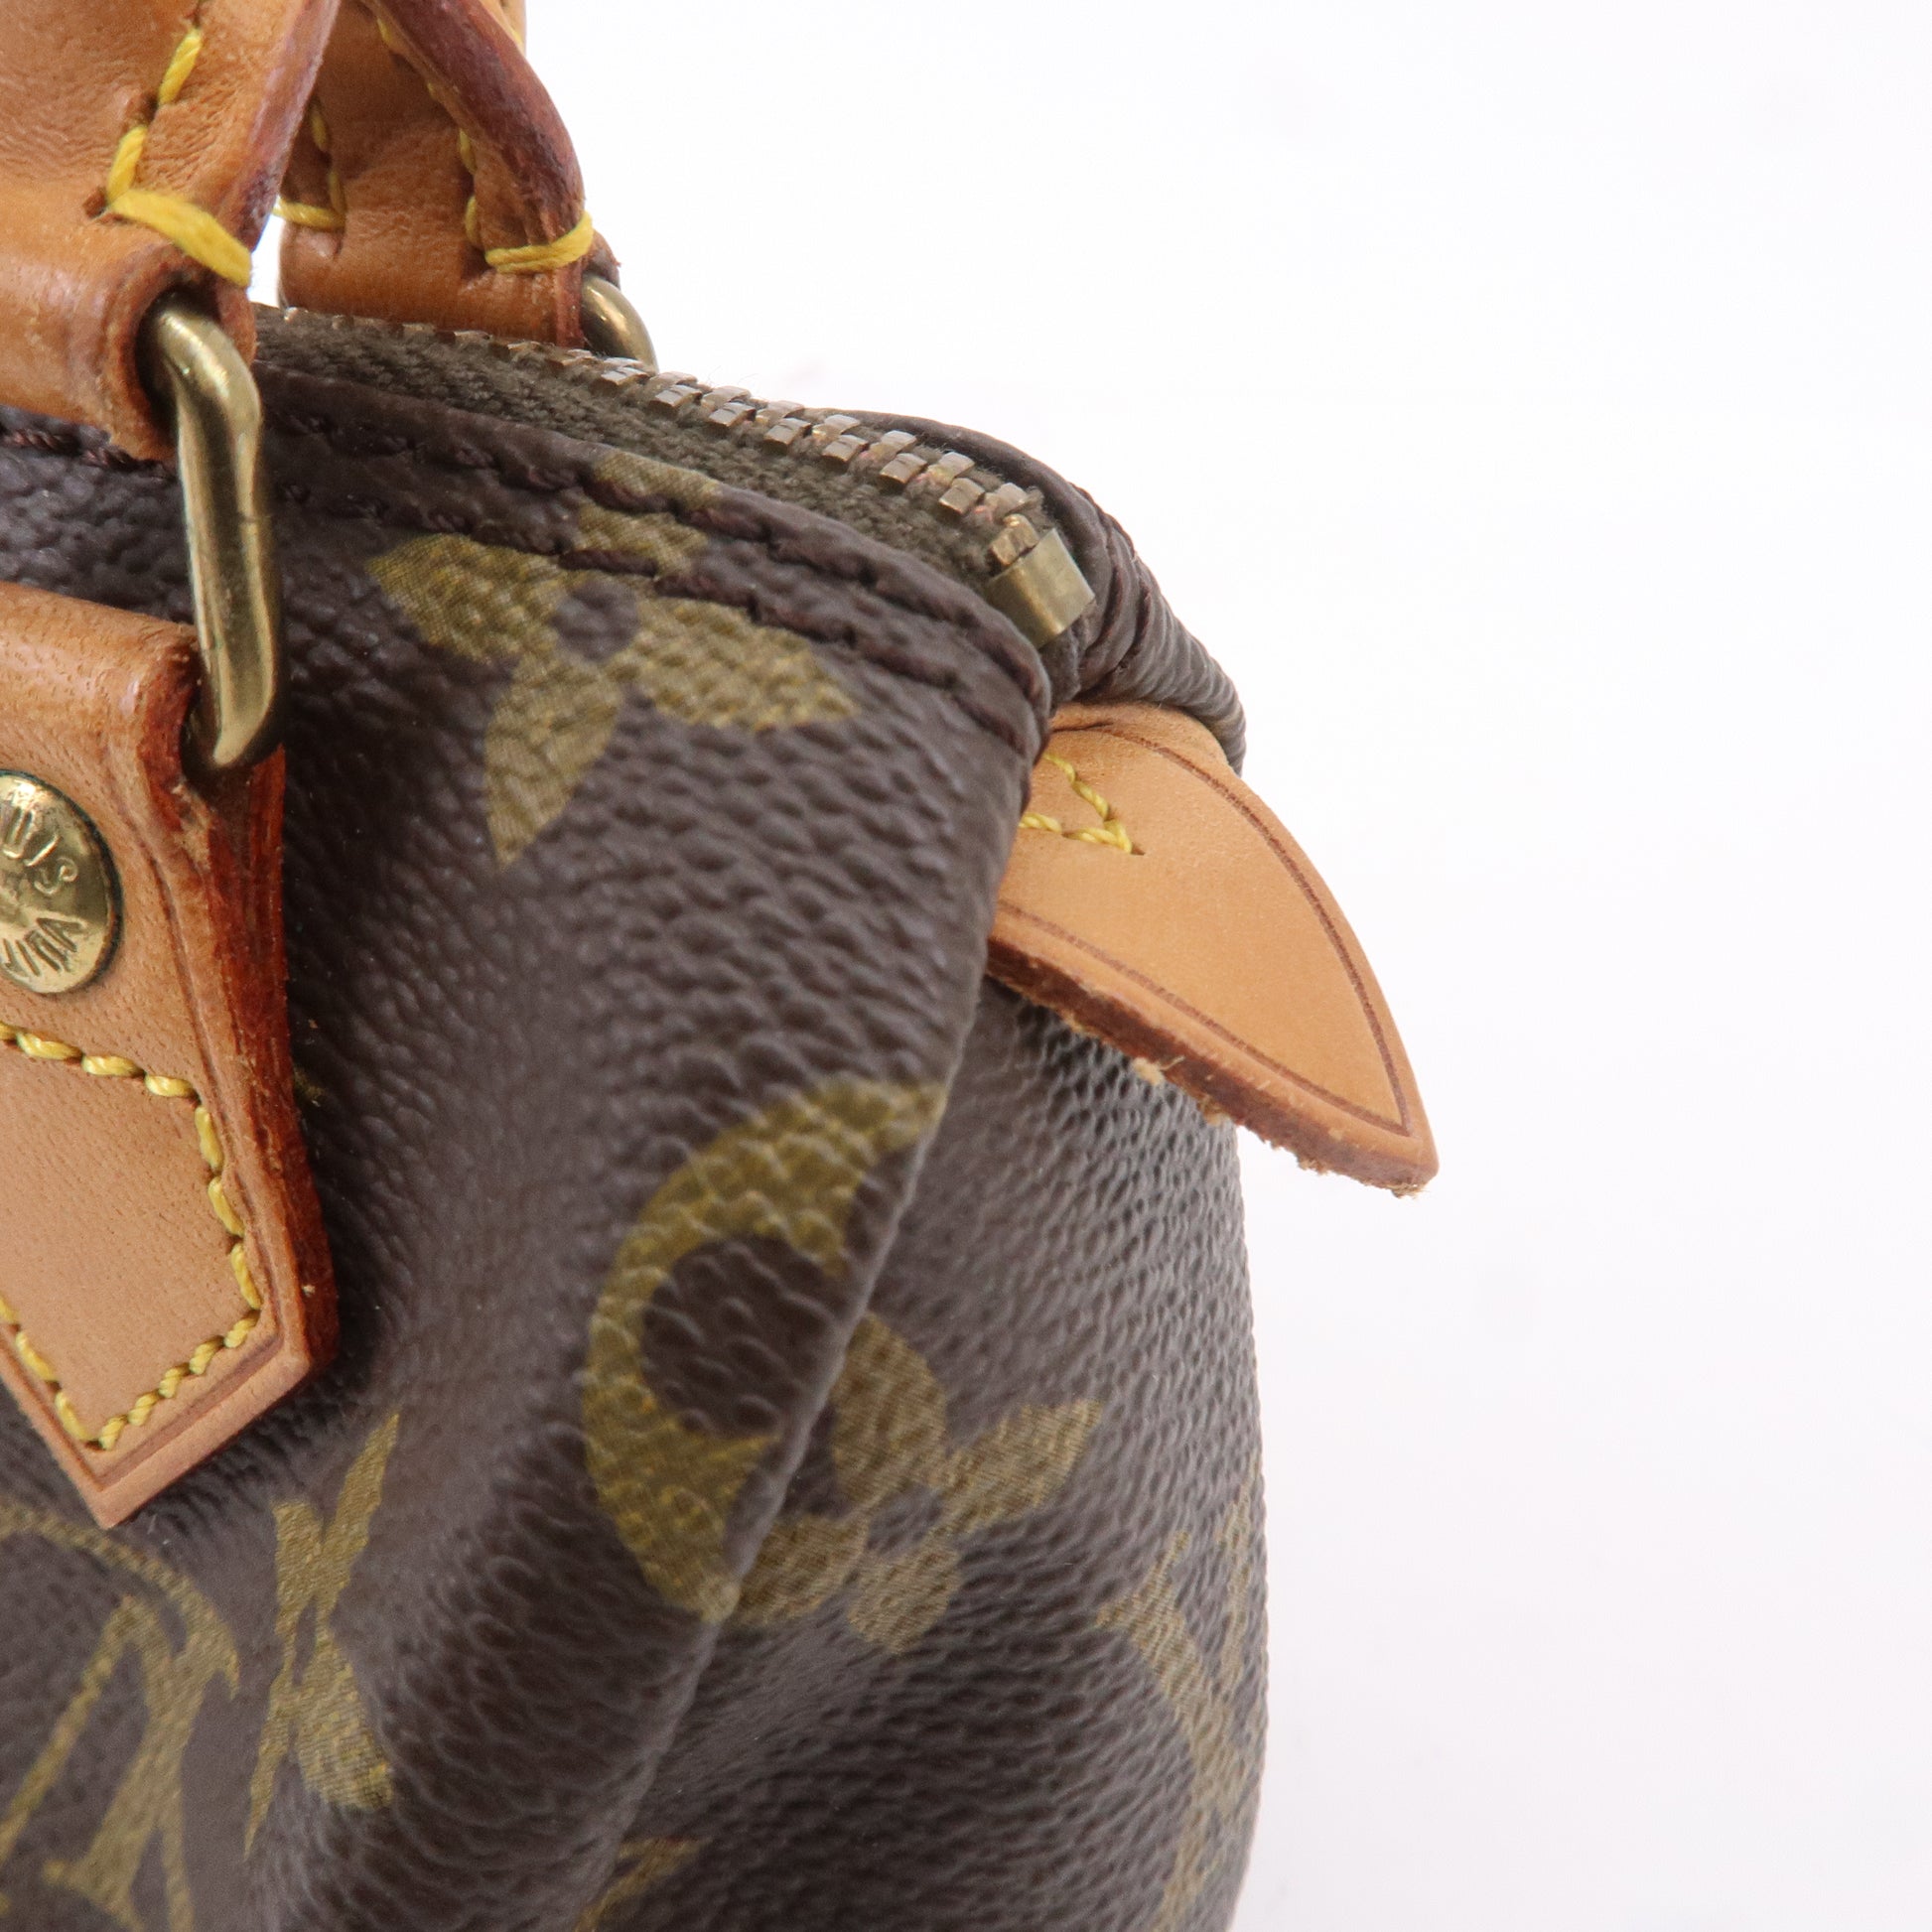 M41534 & Speedy - Mini - Louis - Monogram - Vuitton - Strap - ep_vintage  luxury Store - J00145 – dct - Louis Vuitton Ribera mini handbag in ebene  damier canvas and brown leather